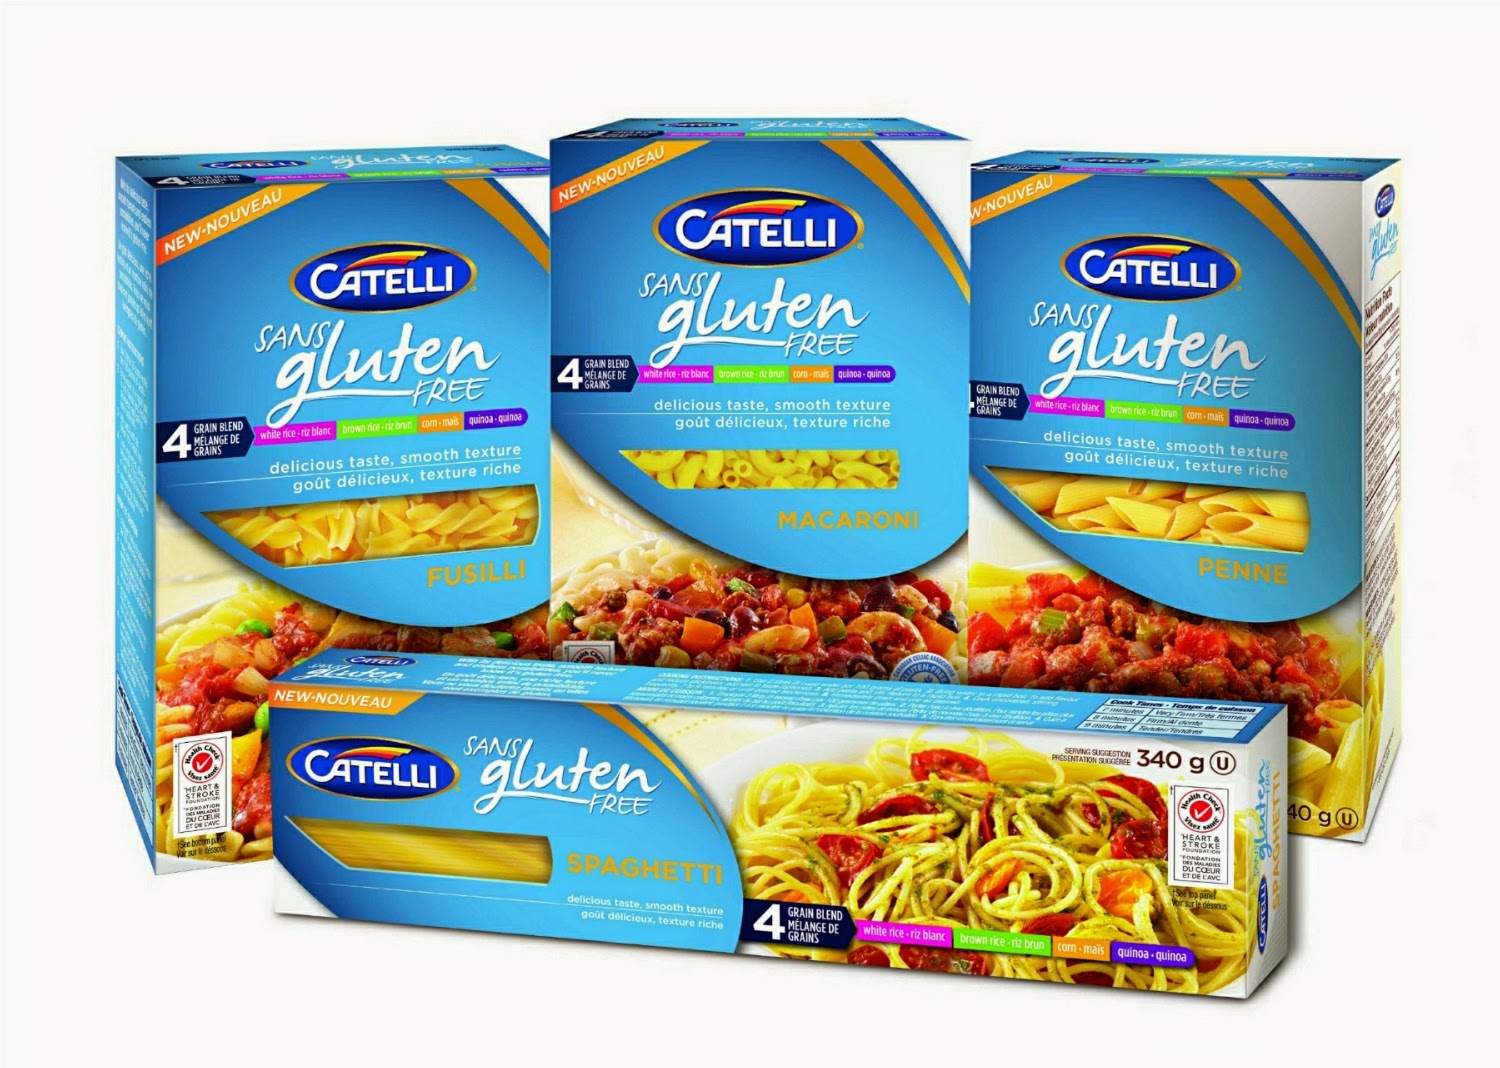 Catelli Gluten Free Pailities